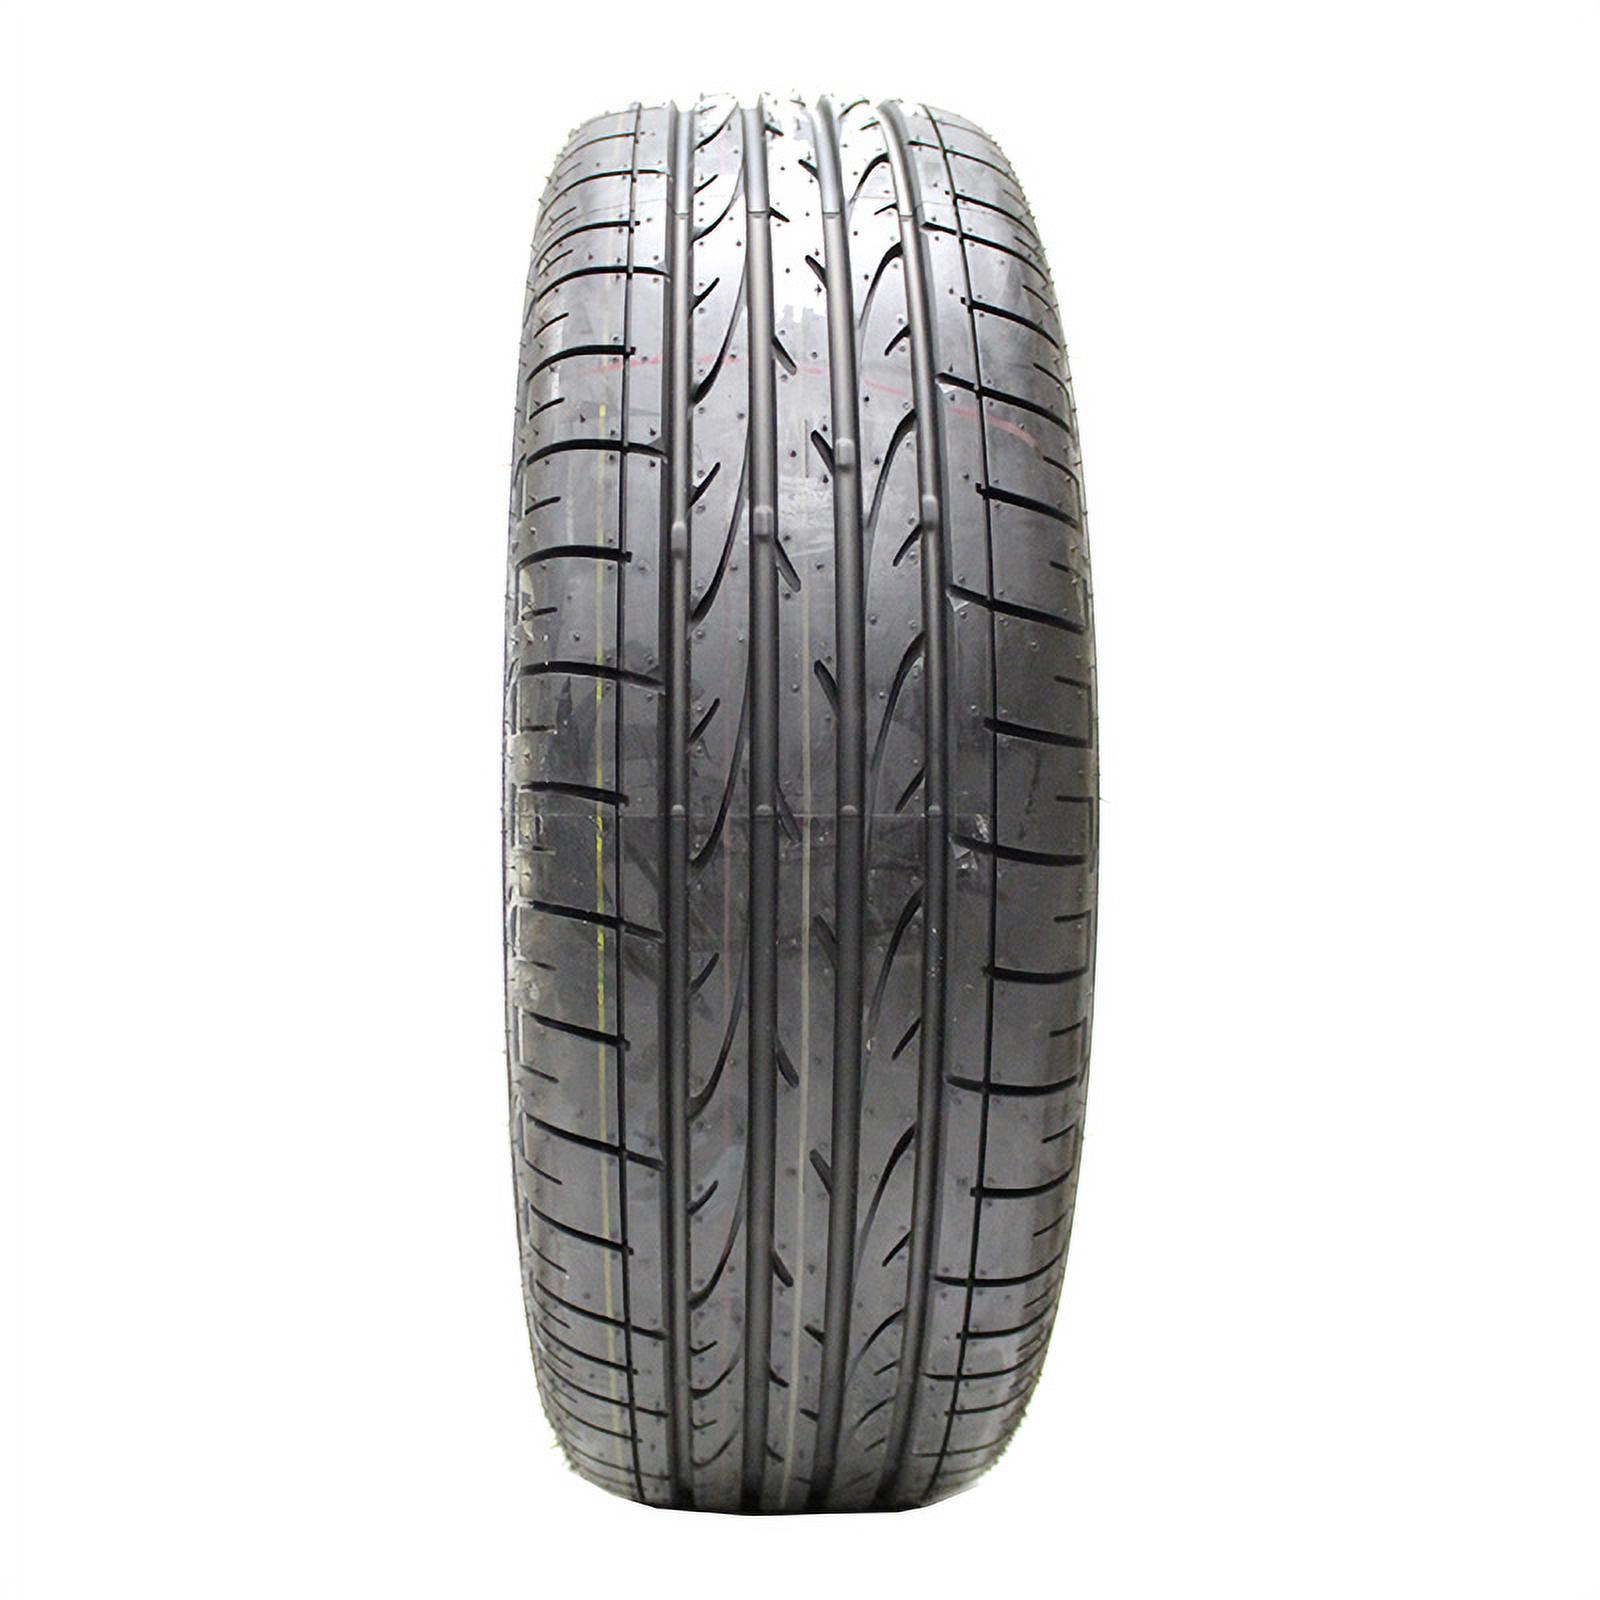 Bridgestone Dueler HP Sport 225/55R18 98 H Tire - image 2 of 2